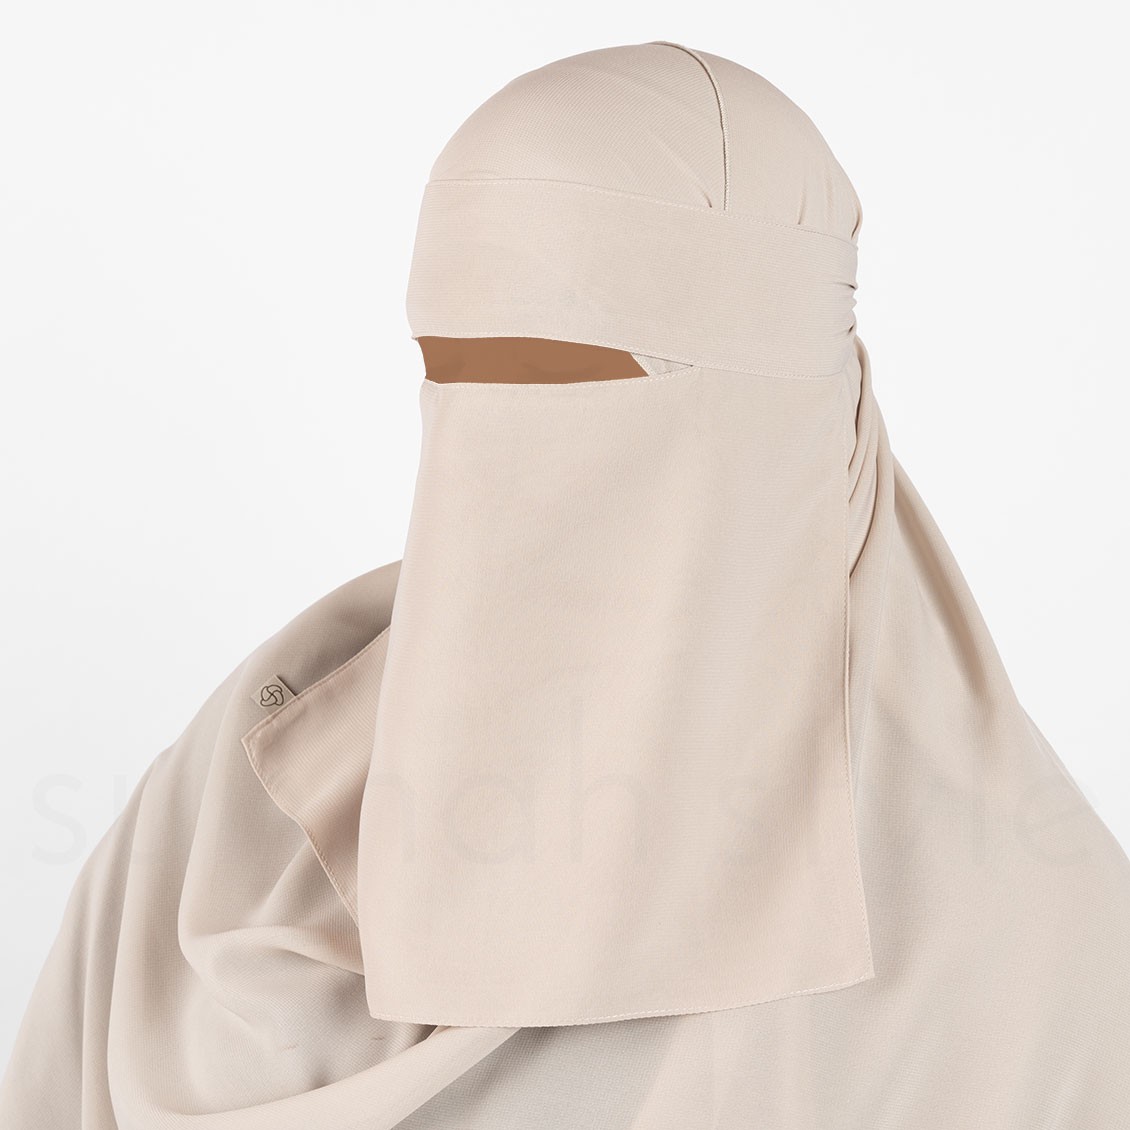 Sunnah Style Short One Layer Niqab Sahara